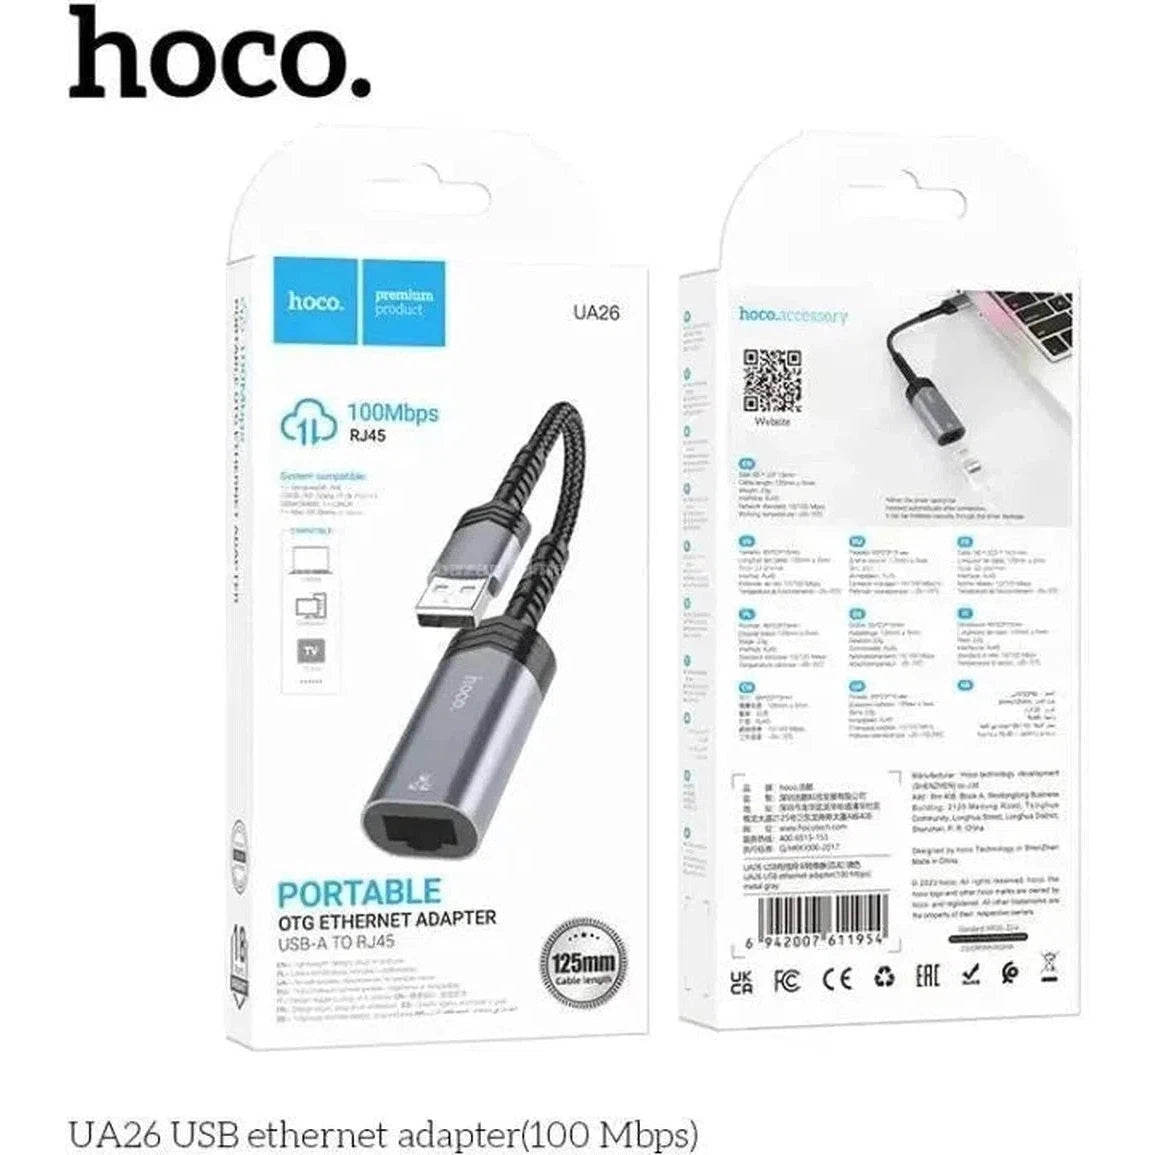 HOCO UA26 USB ethernet adapter(100 Mbps) - Star Light Kuwait